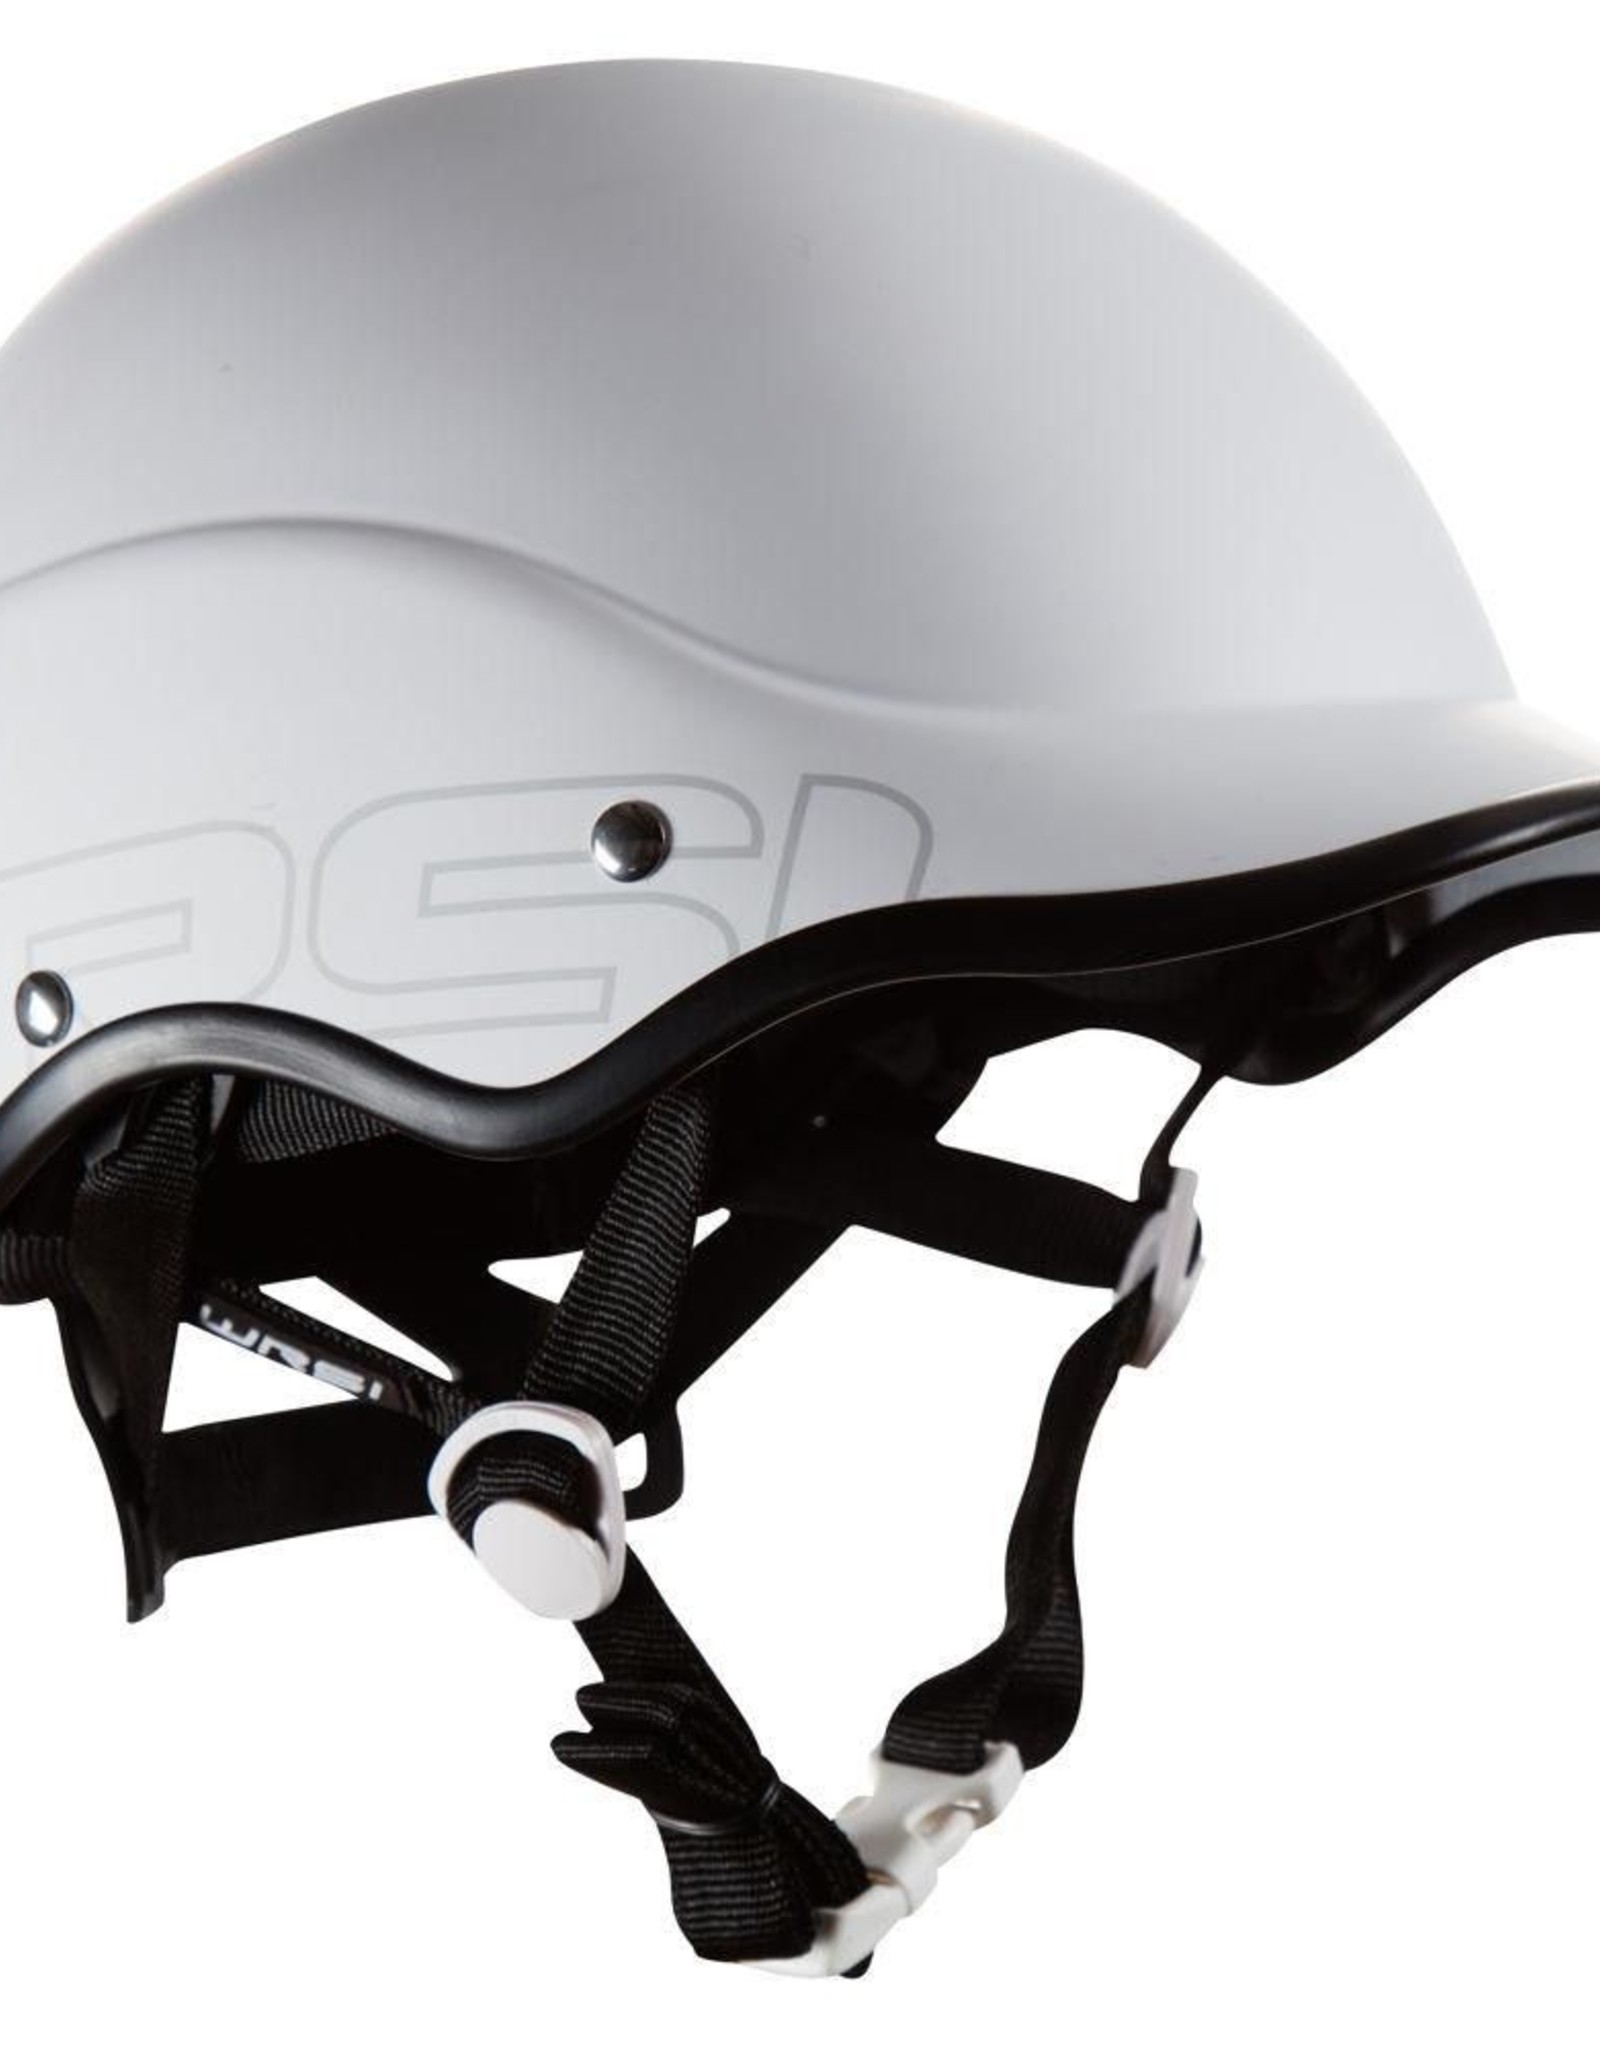 NRS WRSI Trident Helmet - 2018